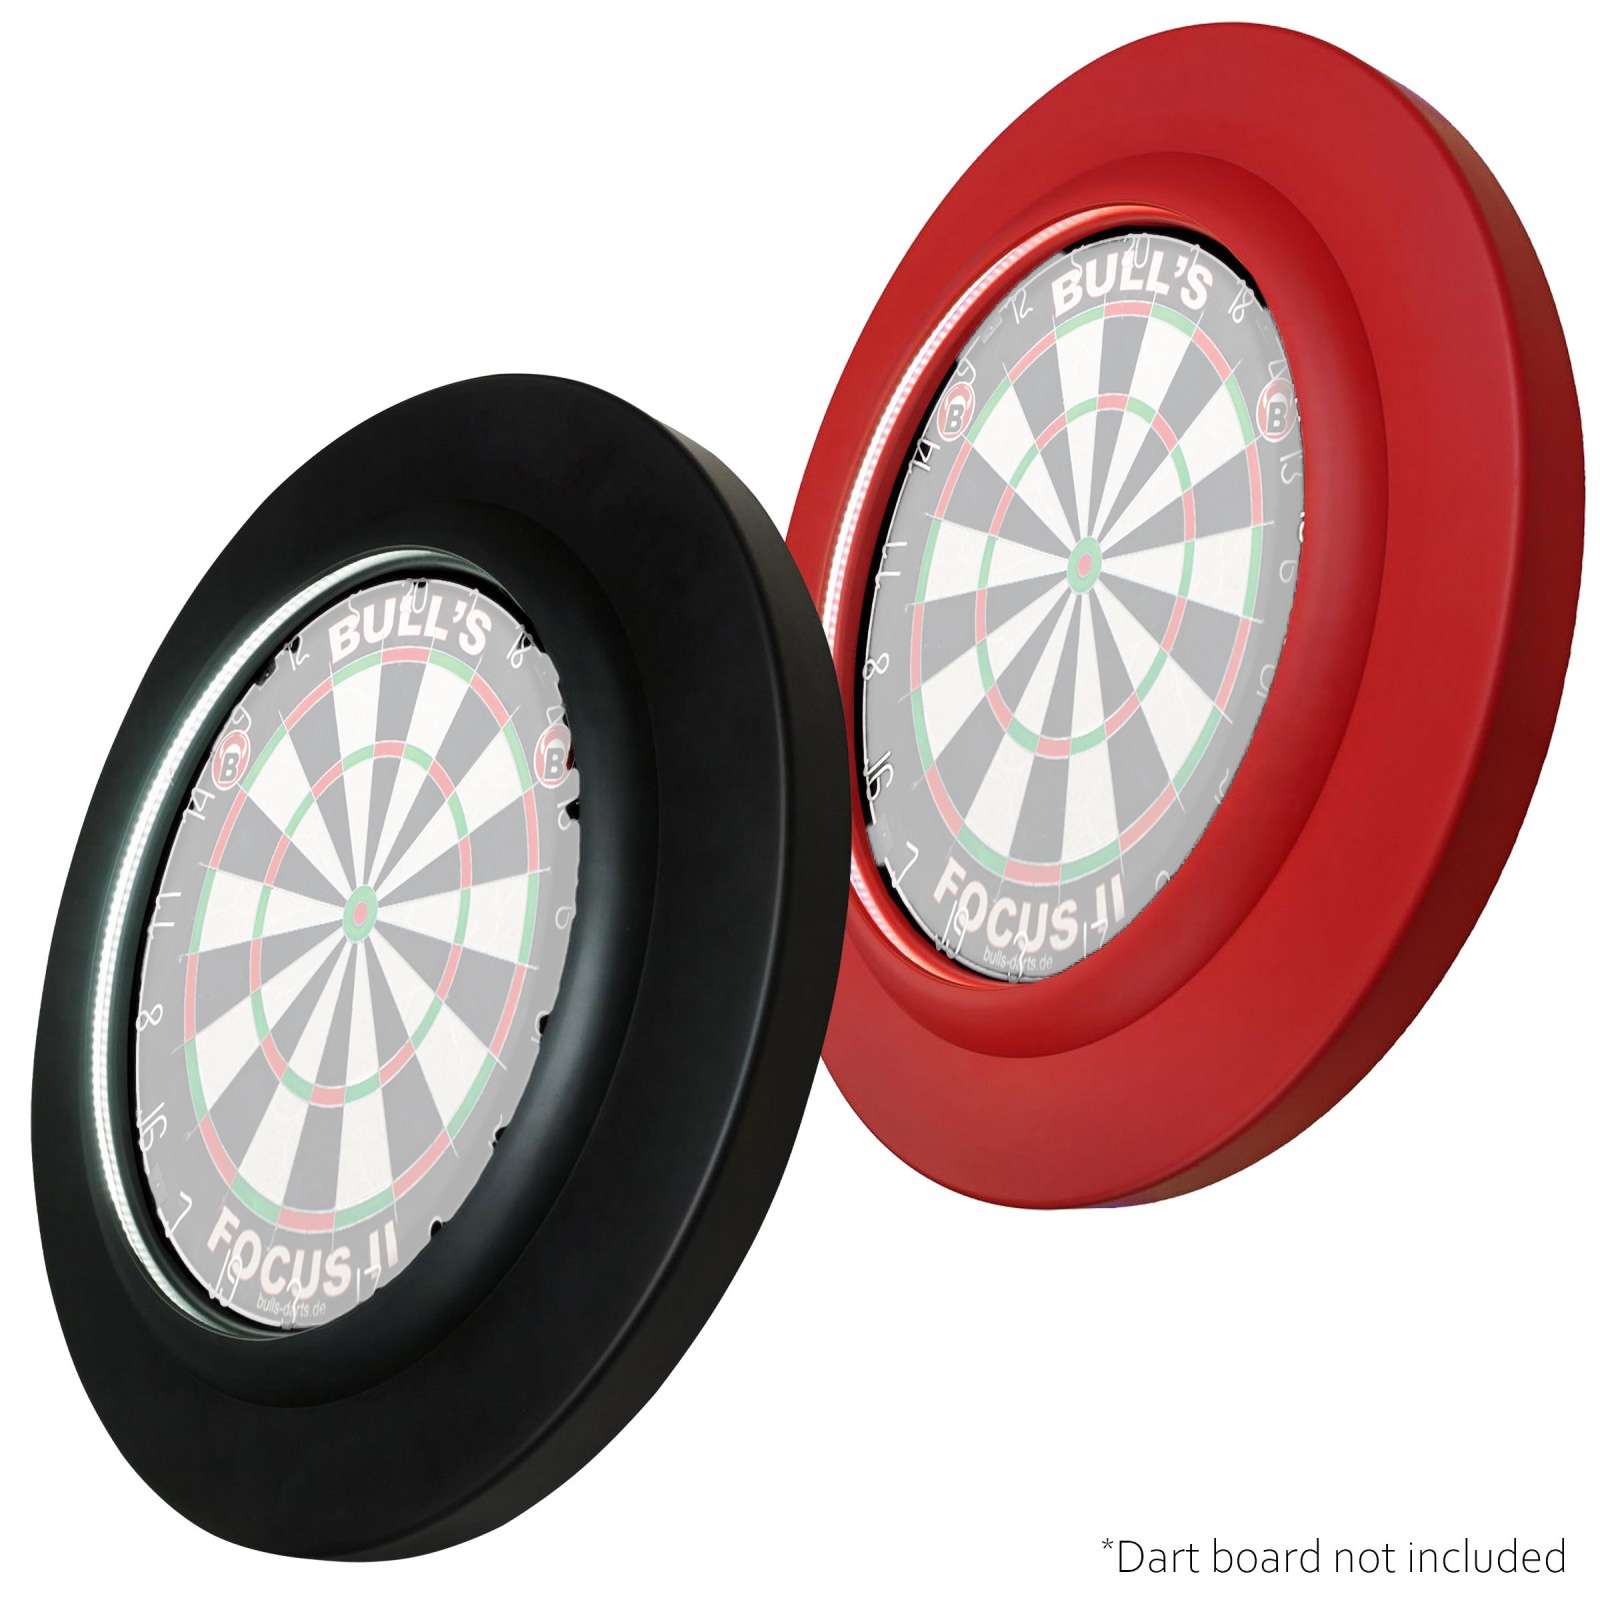 Samenstelling kiezen aangrenzend Dragon darts PU rubber LED Lightning surround ring - rood of zwart -  deDartshop.nl